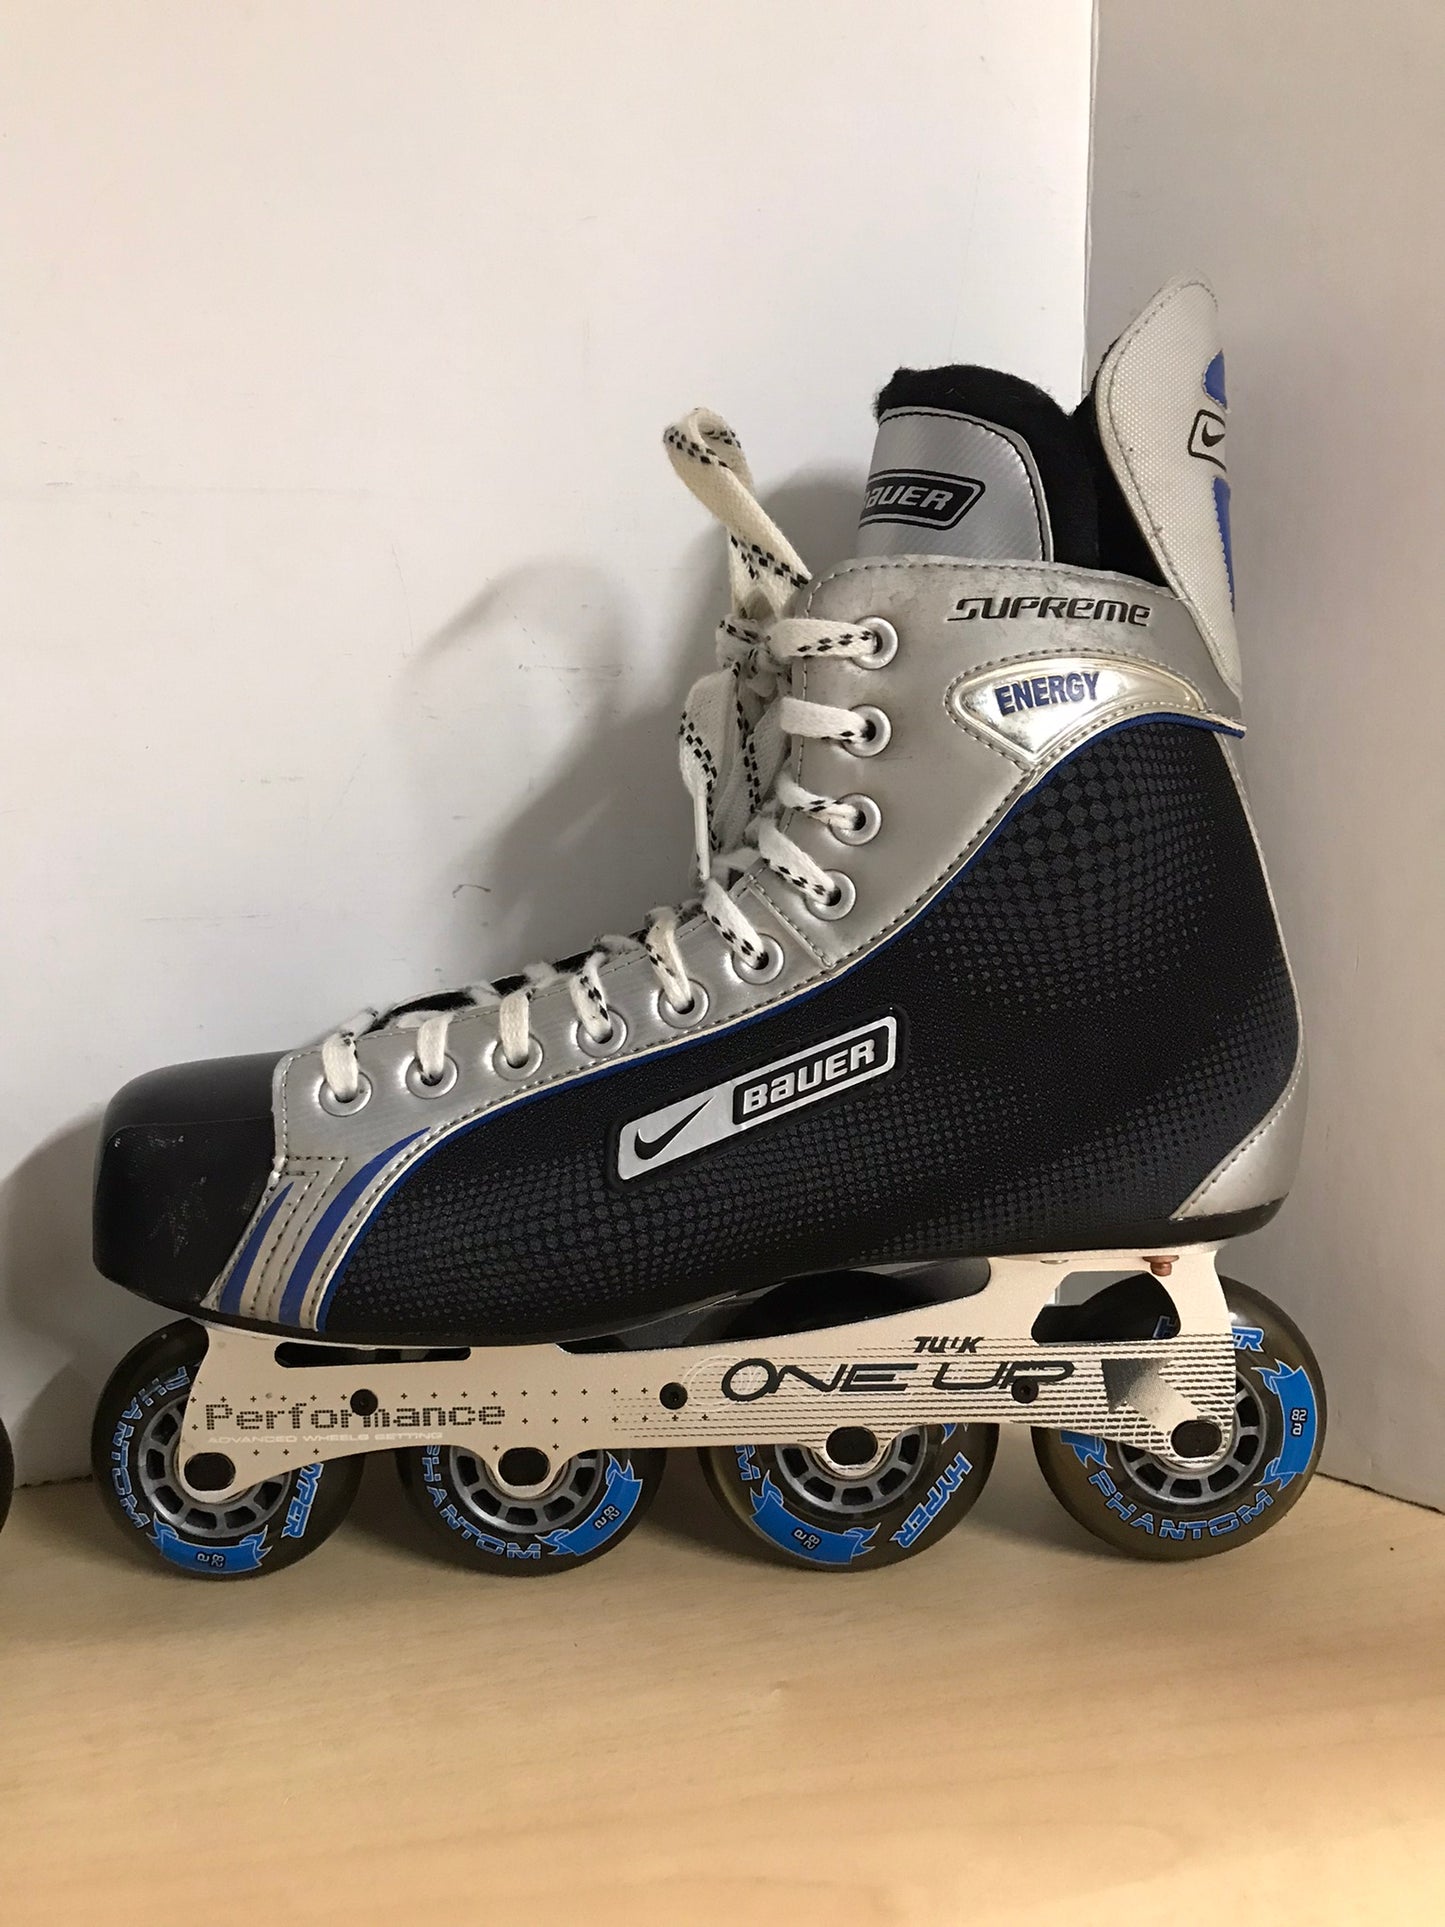 Hockey Roller Hockey Skates Men's Size 12.5 Shoe Size Bauer Supreme As New